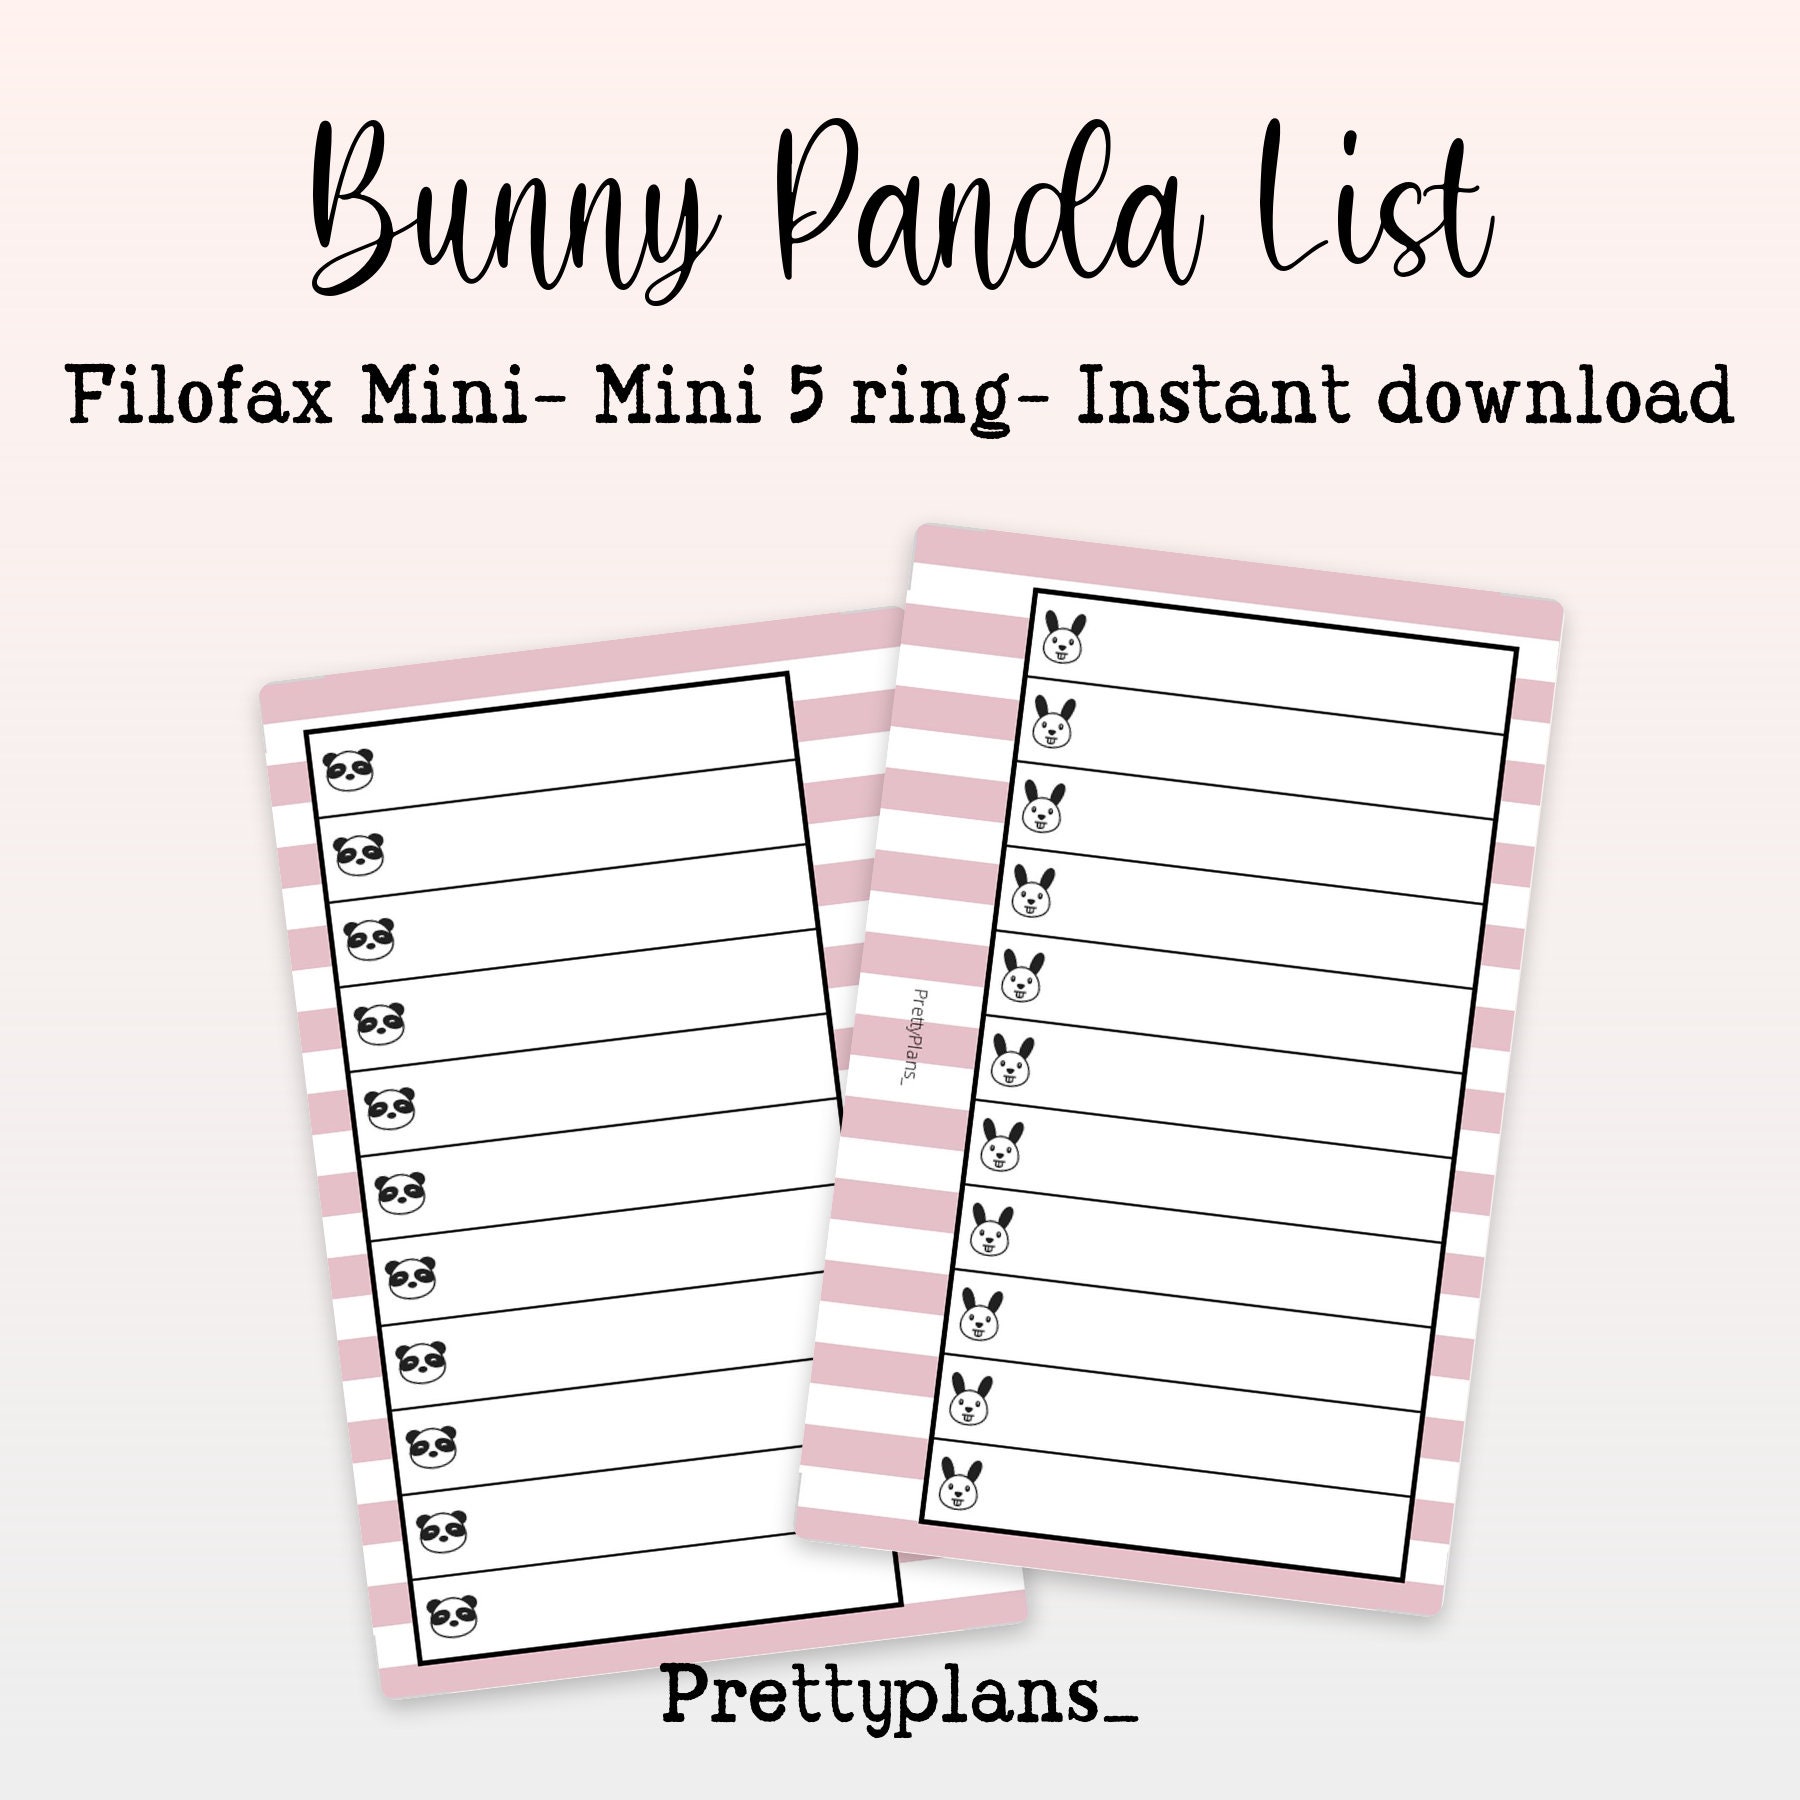 Printable Cute Cat Daily Planner, Cute Cat Theme Day Planner, Cute Cat  Undated Filofax Inserts, Cute Cat Planner Inserts, Instant Download